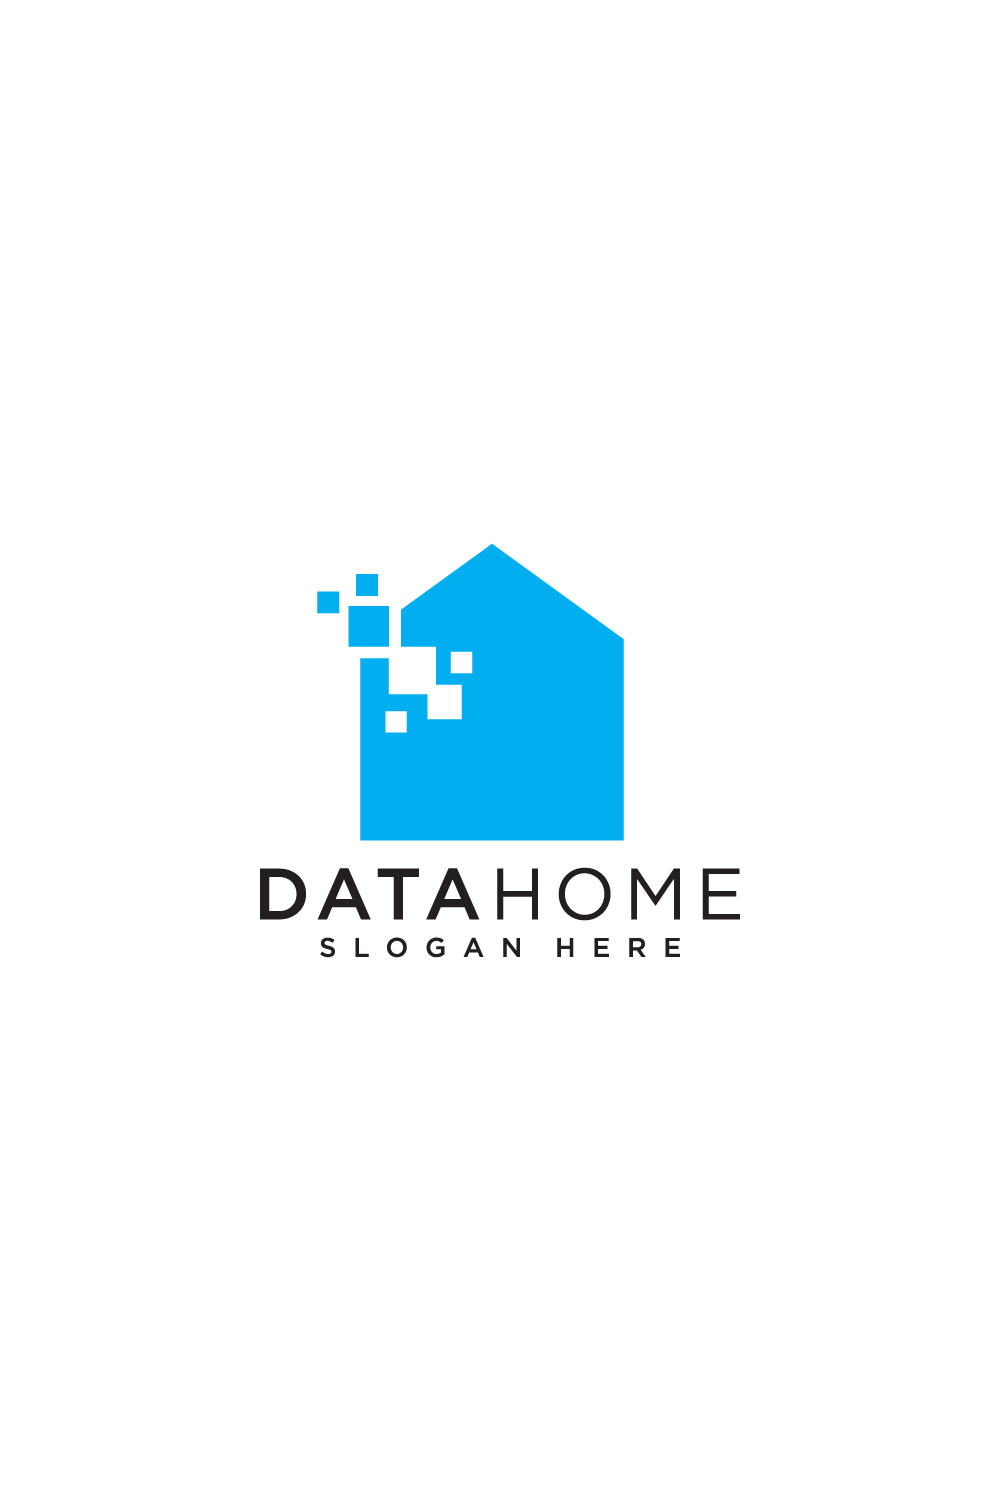 data home logo design vector pinterest preview image.